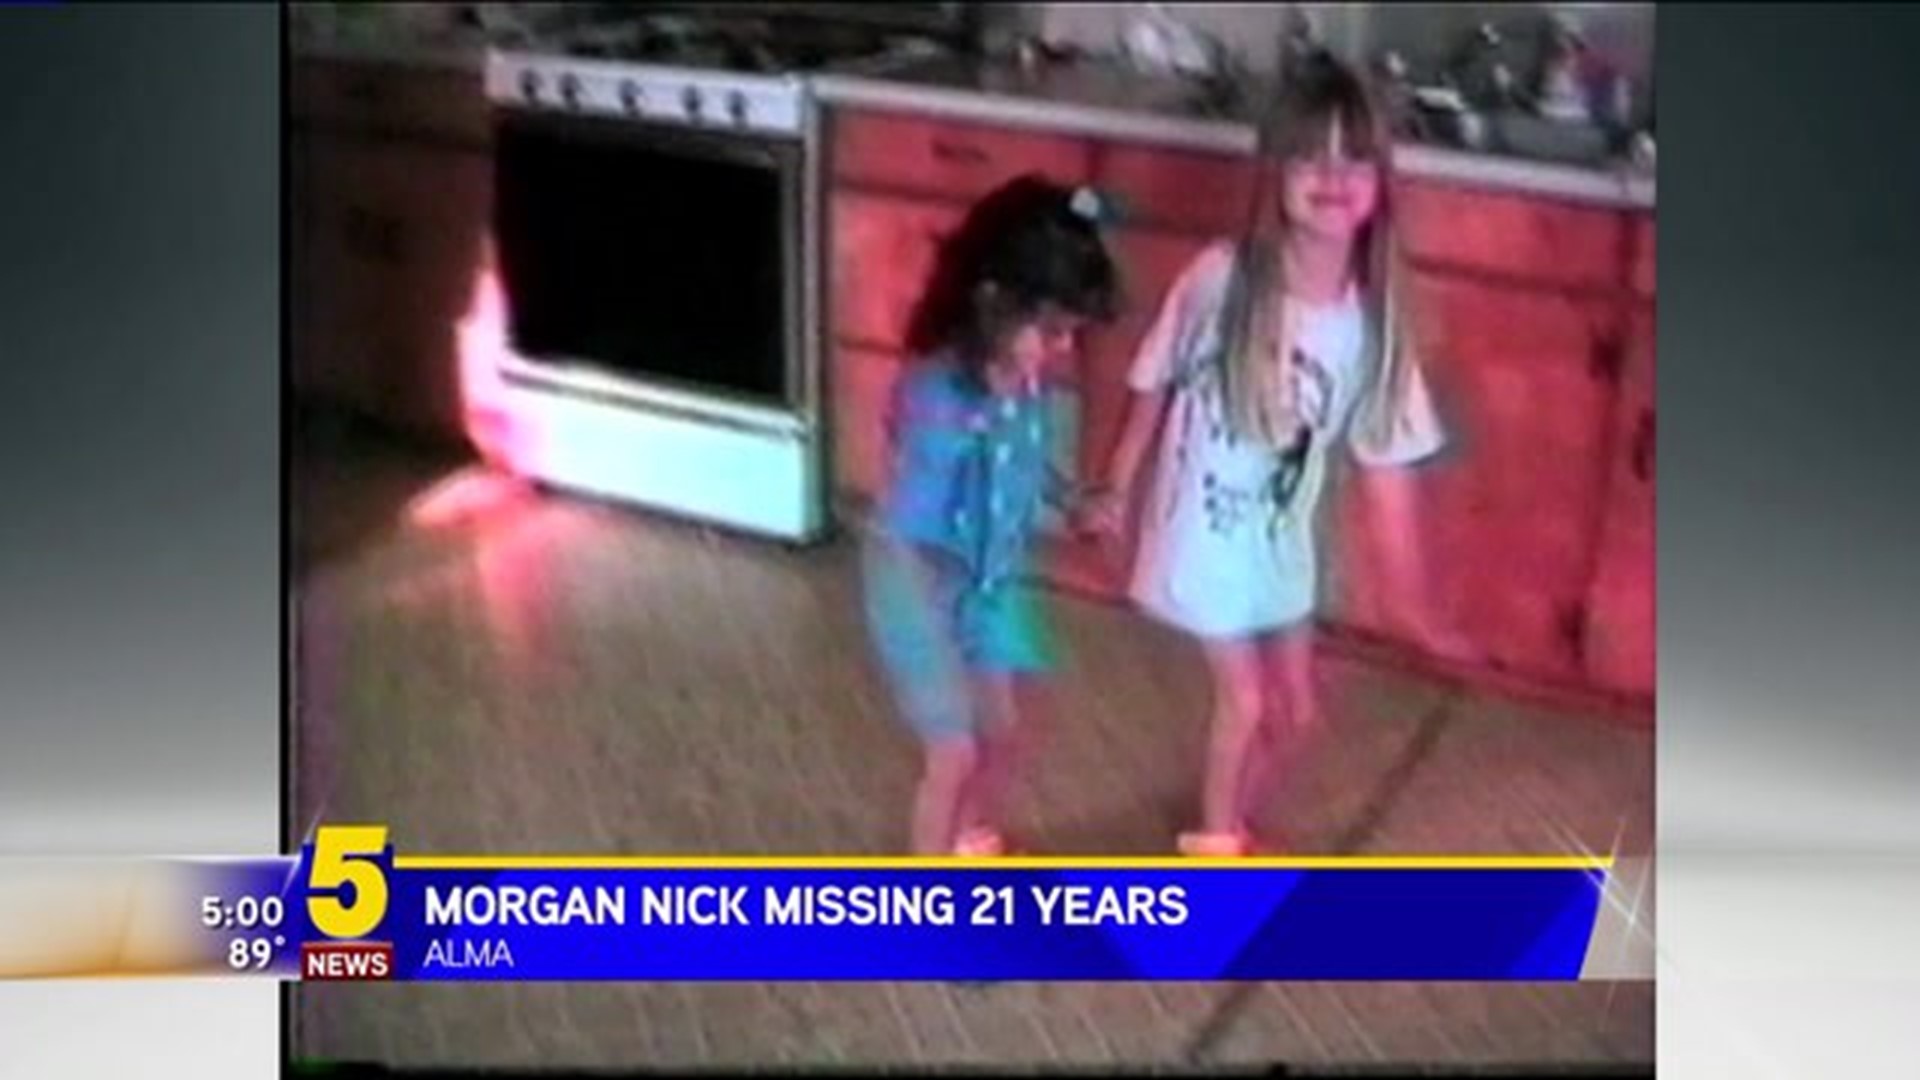 Morgan Nick Missing 21 Years